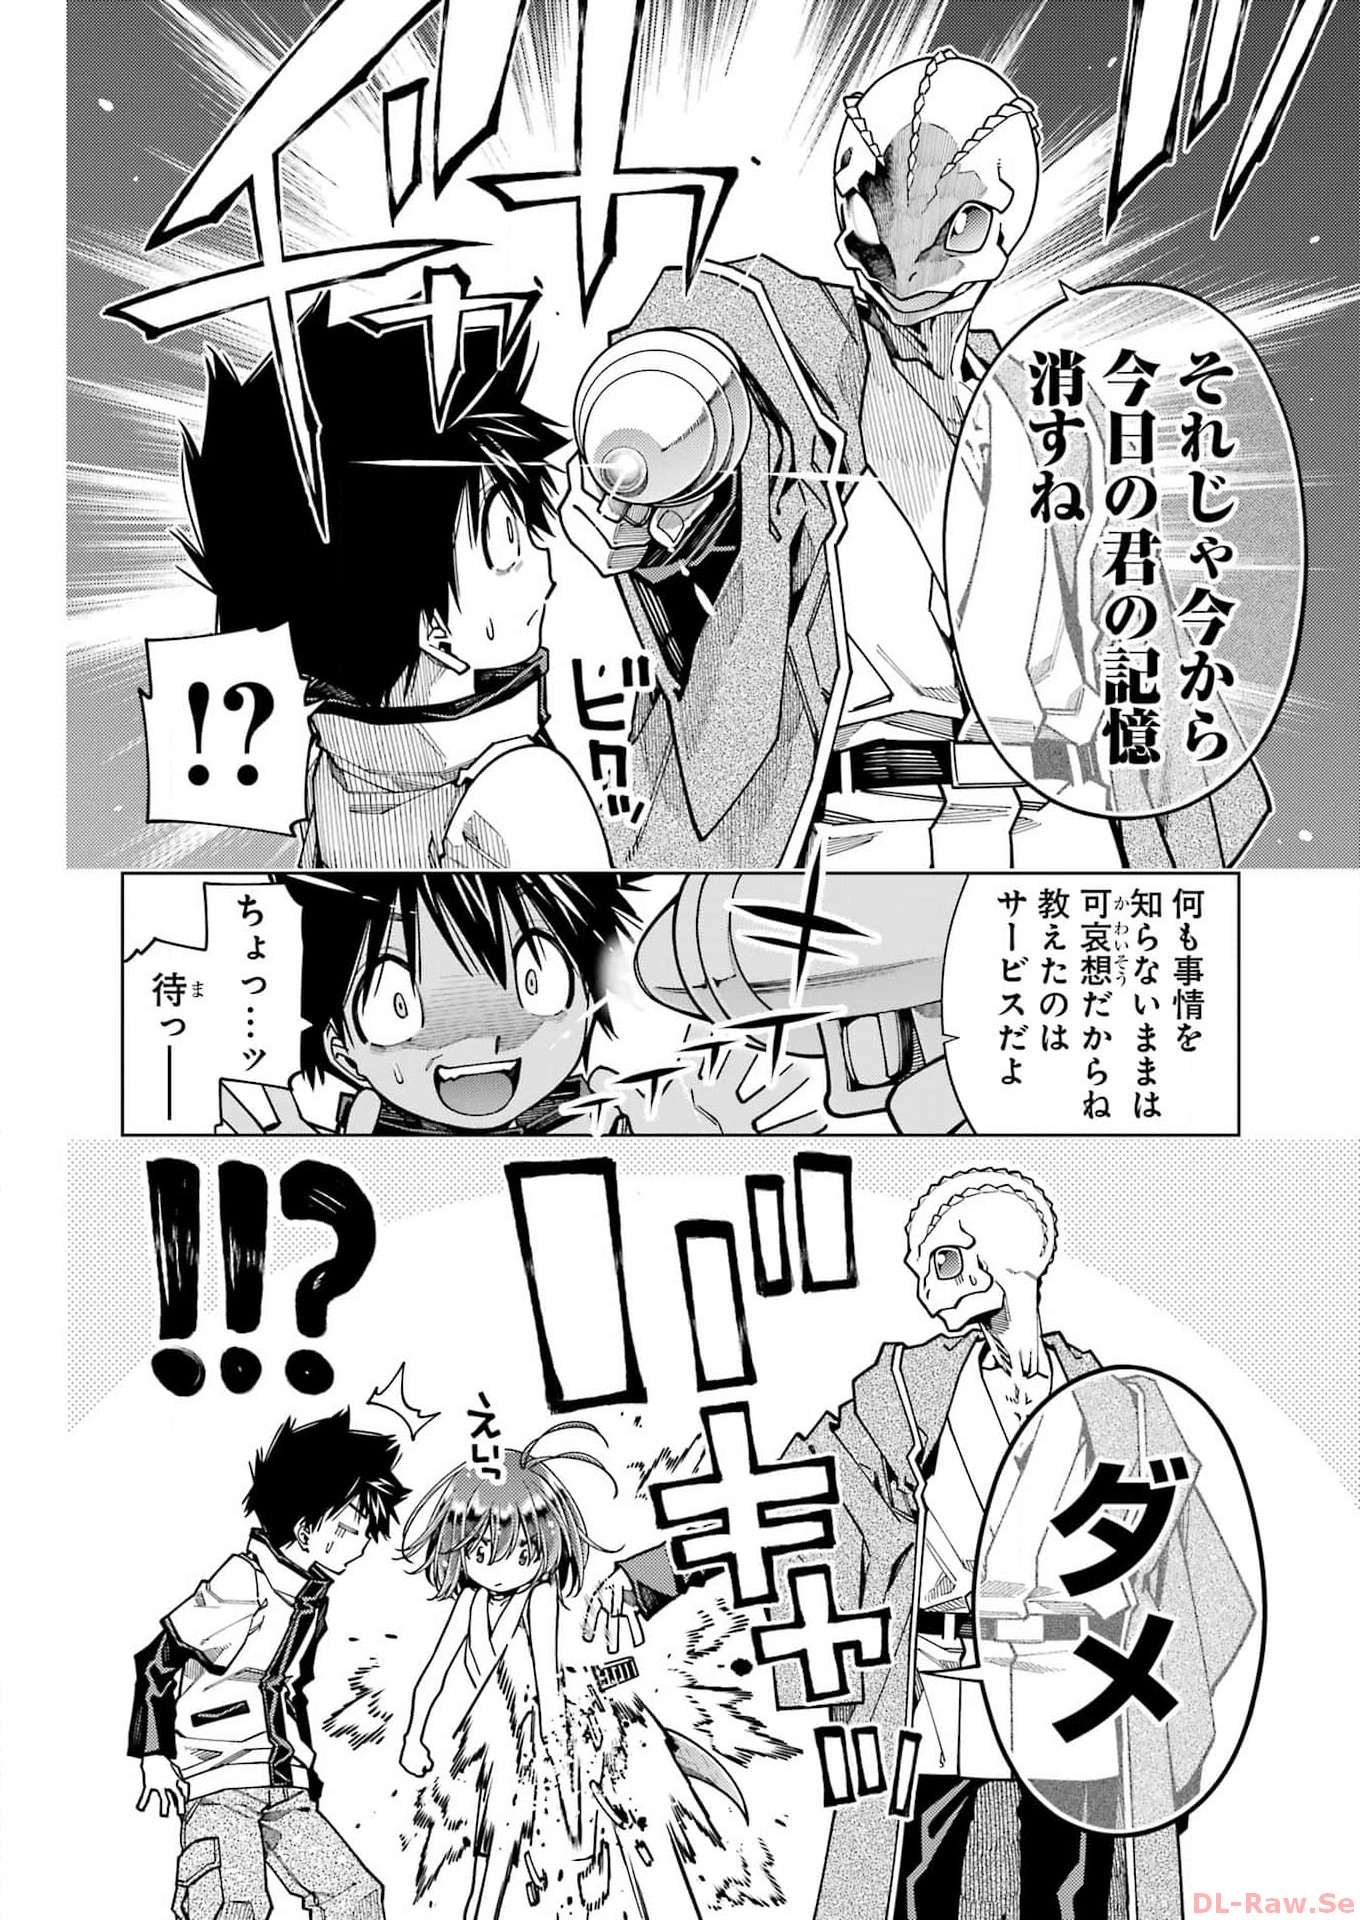 Kyouryu-chan to Kaseki-kun - Chapter 39 - Page 2